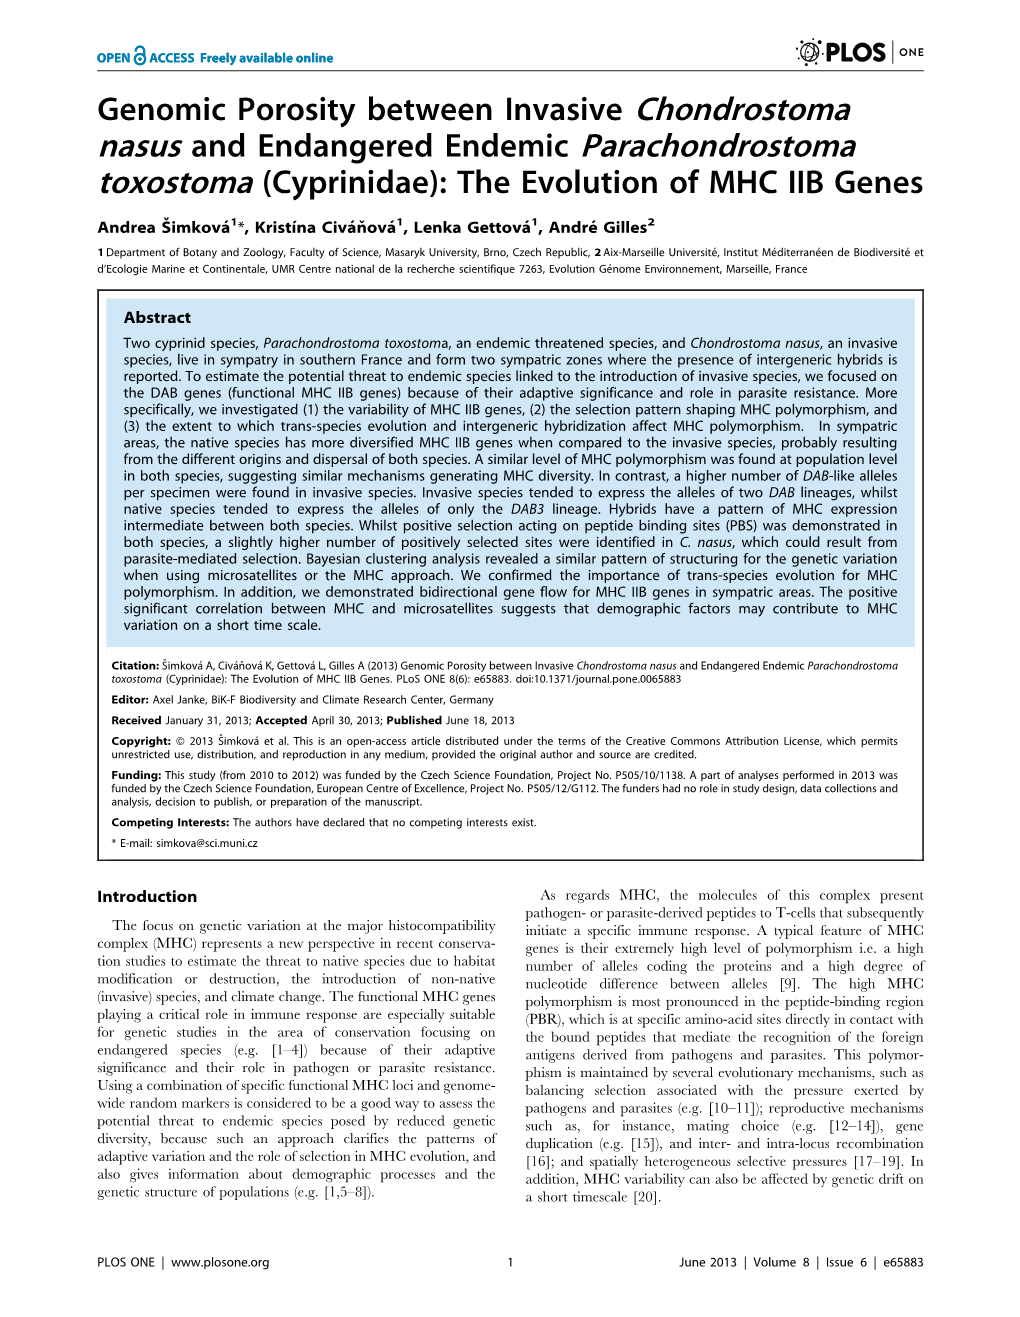 Genomic Porosity Between Invasive Chondrostoma Nasus and Endangered Endemic Parachondrostoma Toxostoma (Cyprinidae): the Evolution of MHC IIB Genes